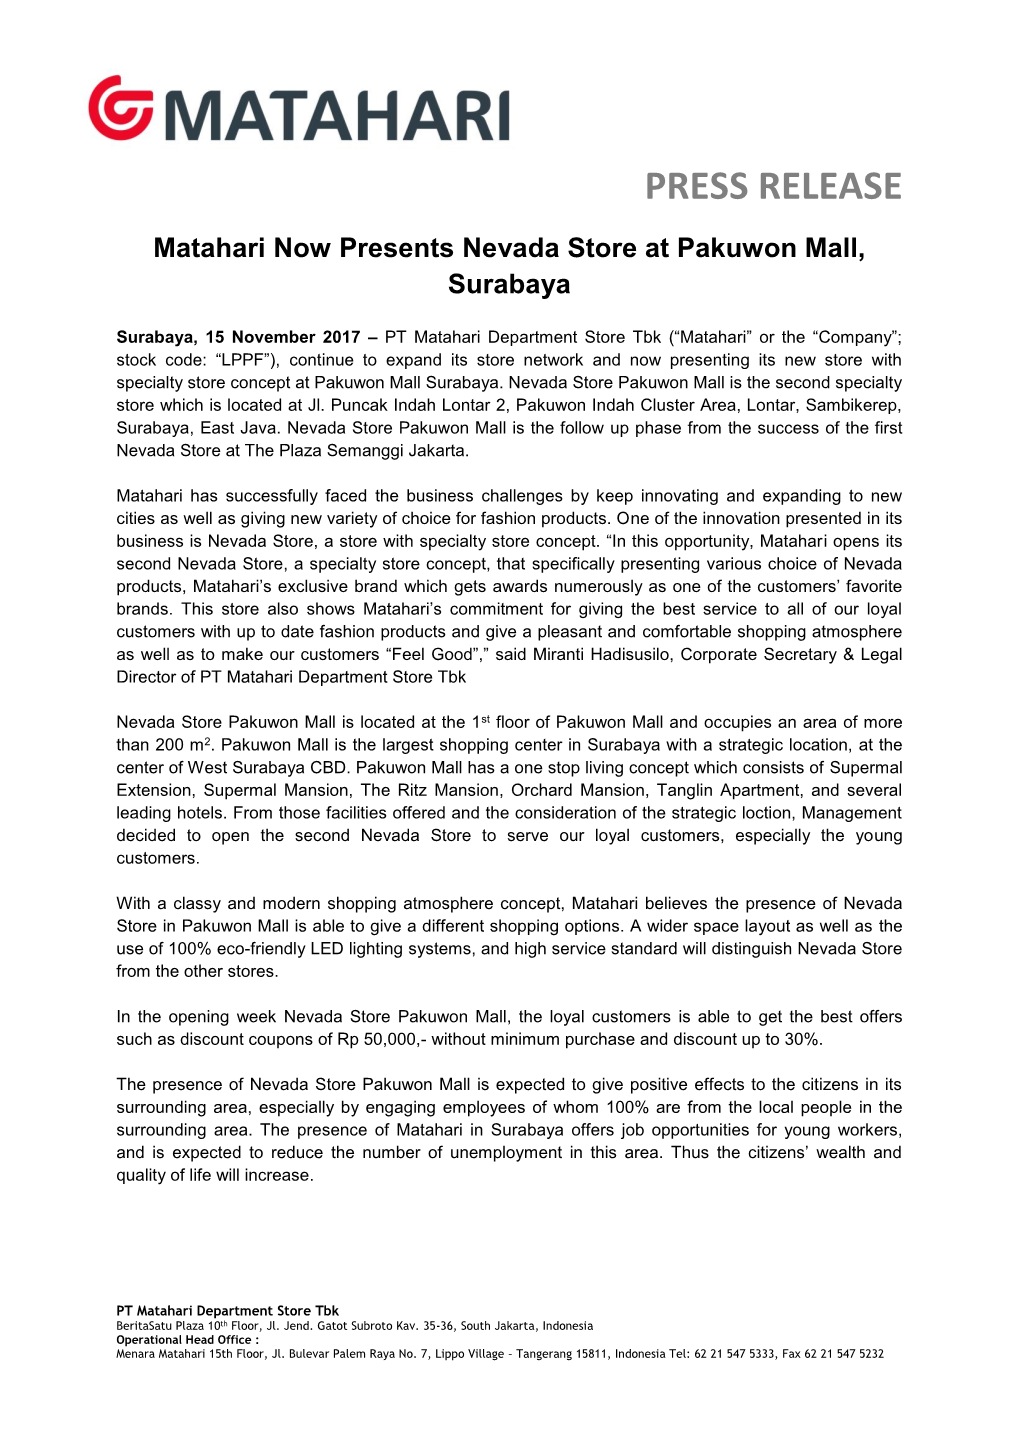 Matahari Now Presents Nevada Store at Pakuwon Mall, Surabaya